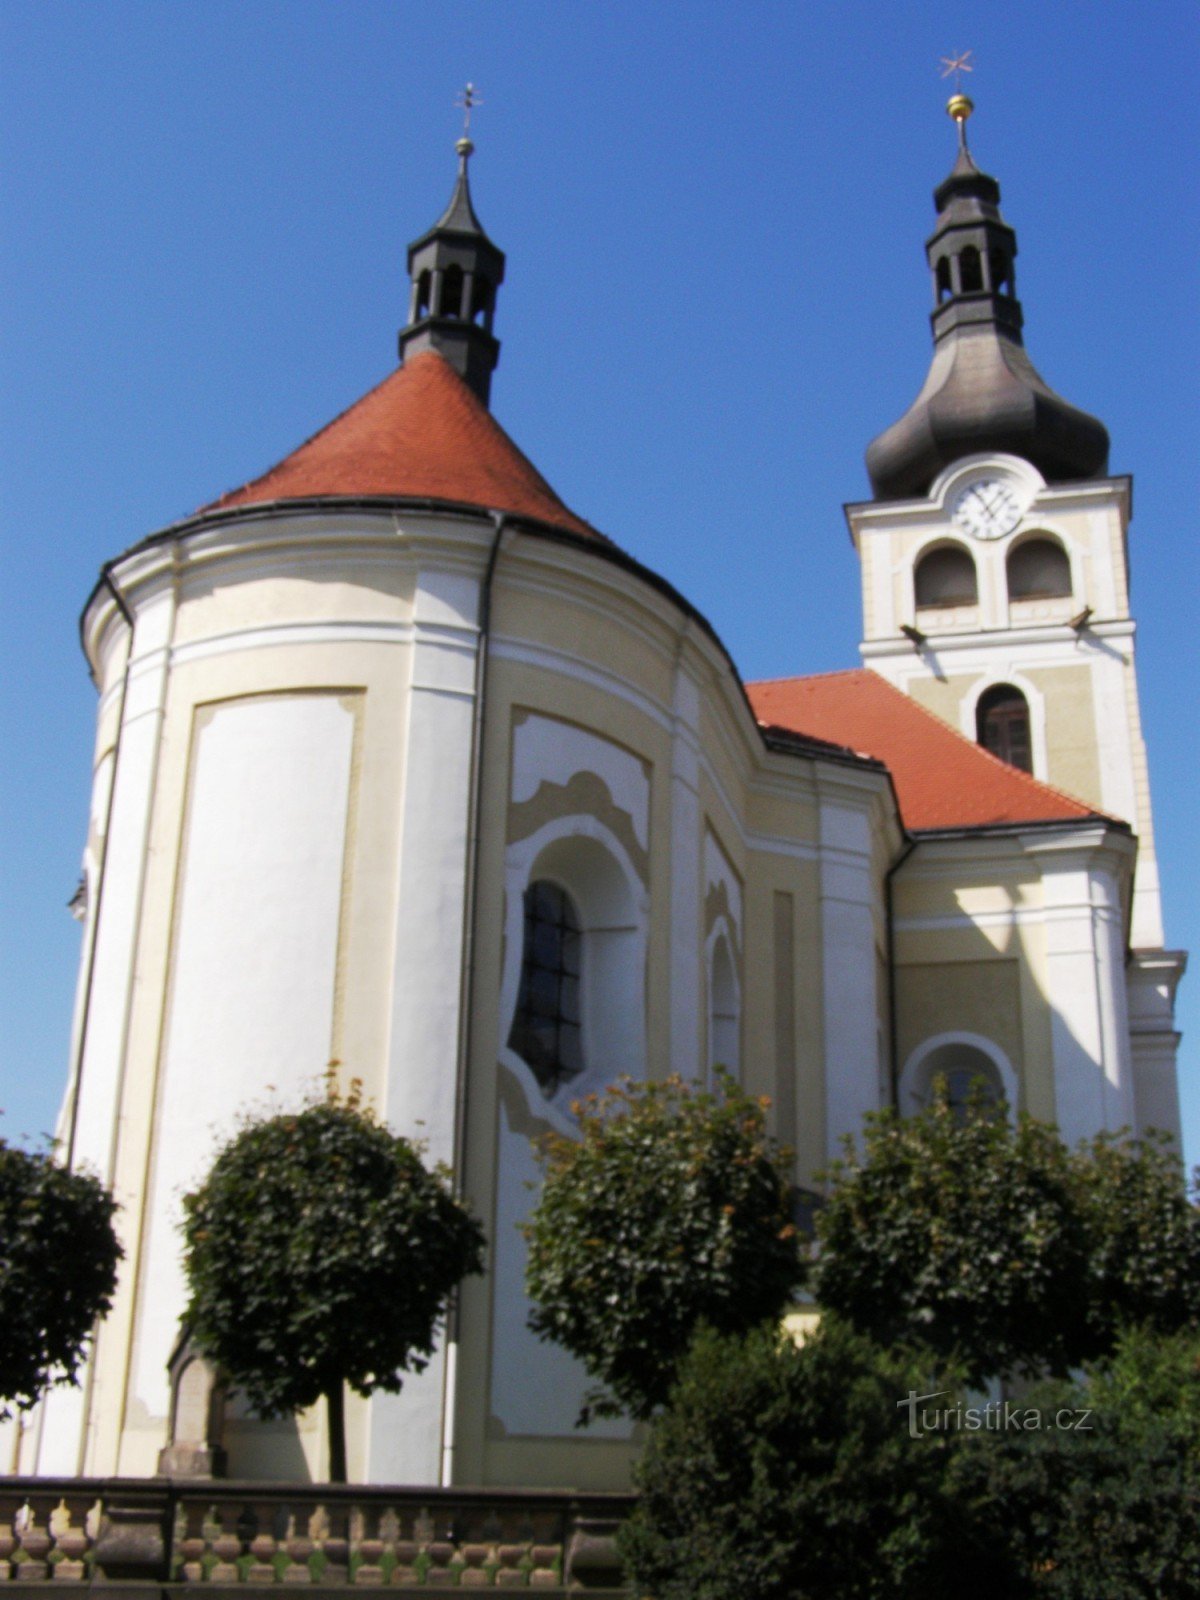 Hořice - kirke